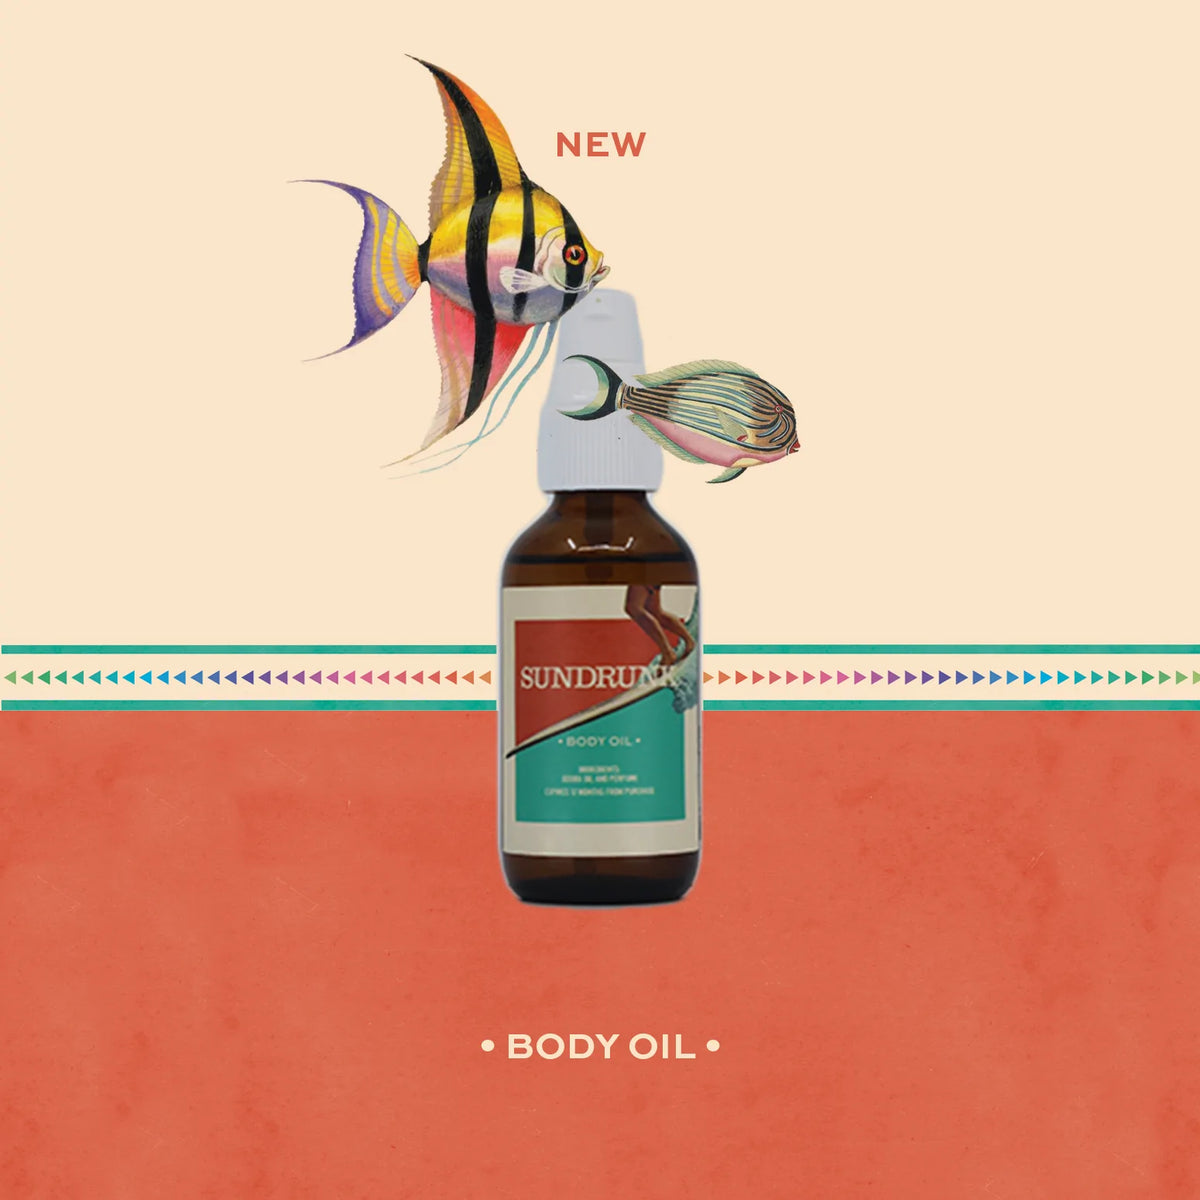 The Juice Body Oil – Intriguingly Beautiful